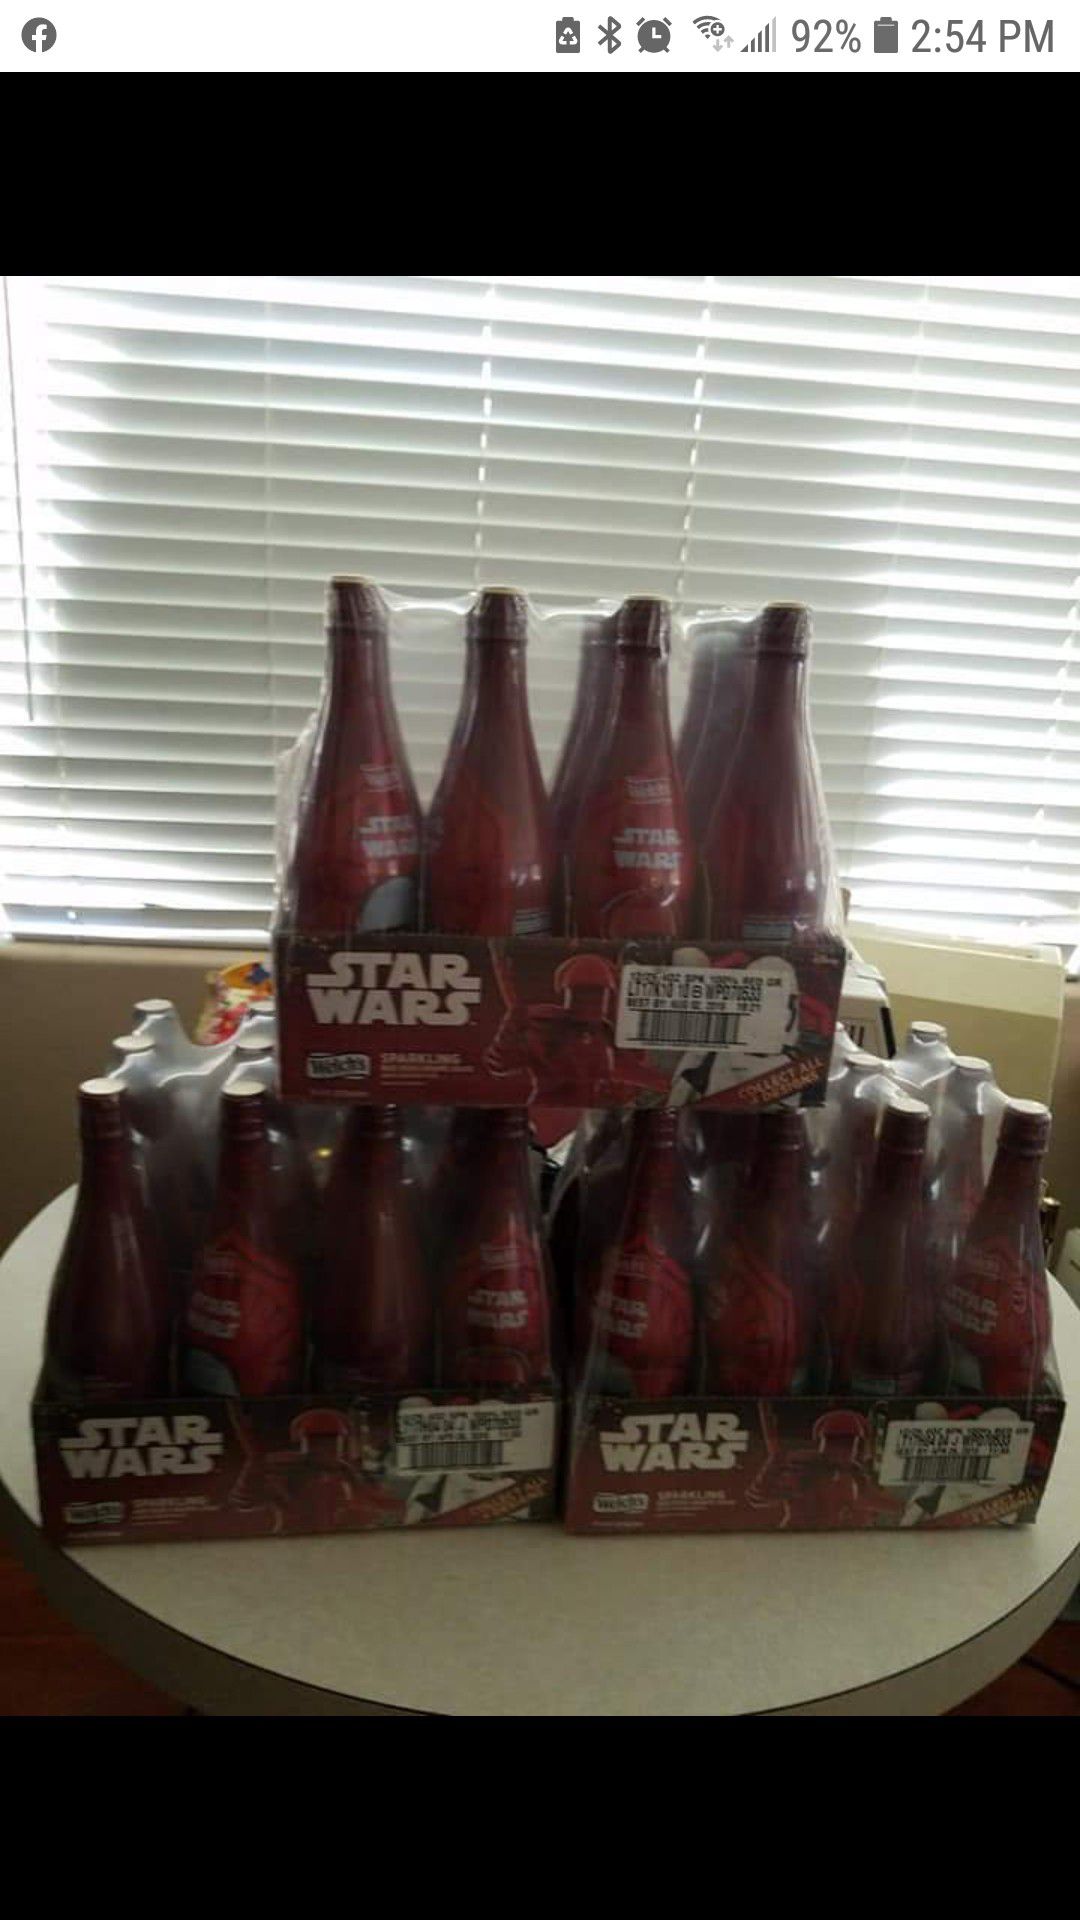 Star Wars Welch's sparkling grape juice 12 bottles